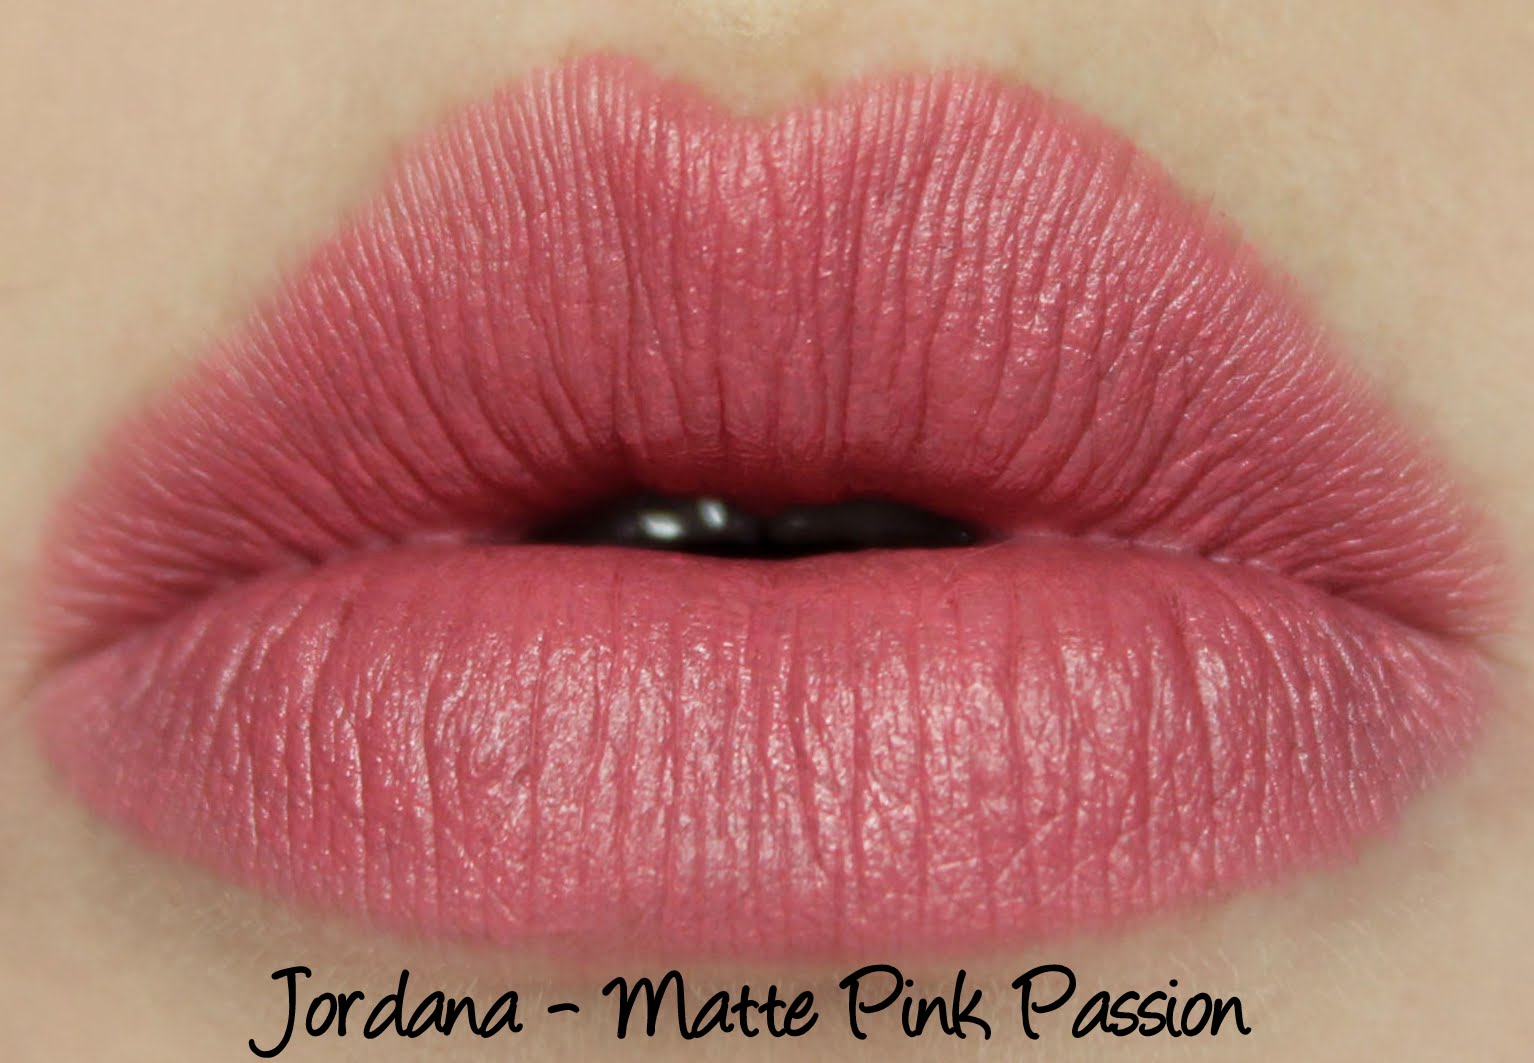 Jordana Matte Pink Passion lipstick swatches & review